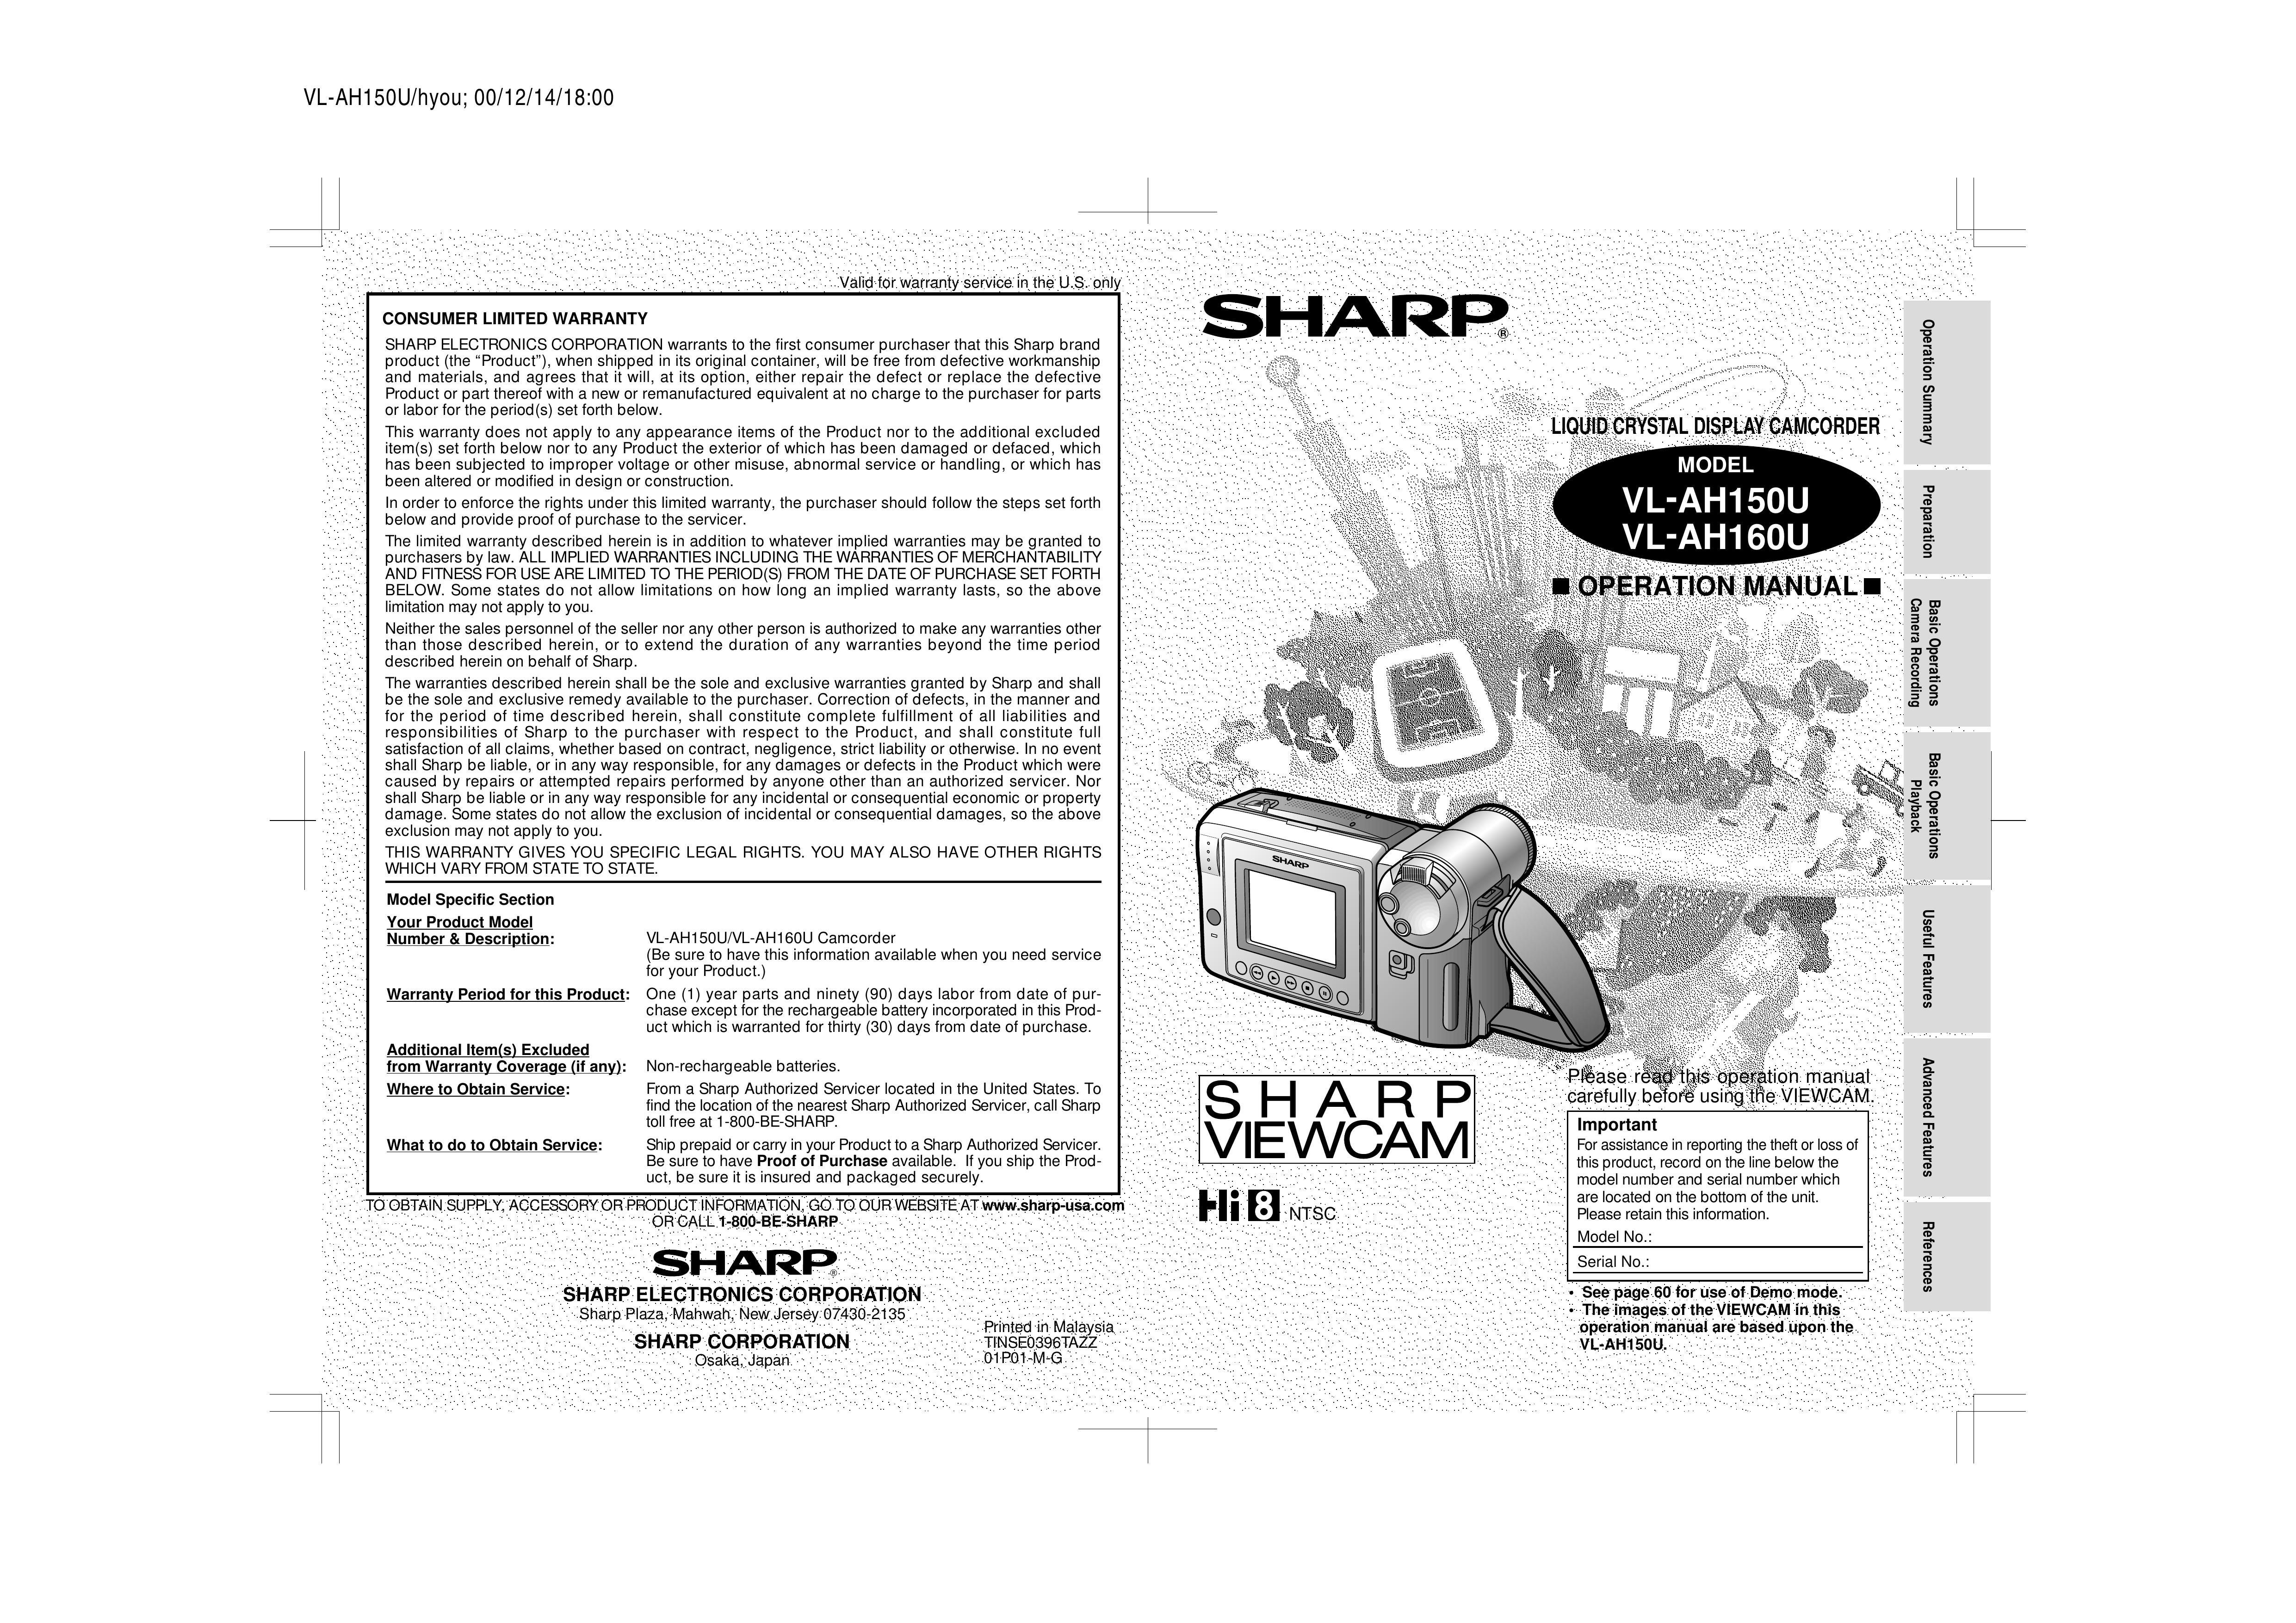 Sharp VL-AH150U Camcorder User Manual